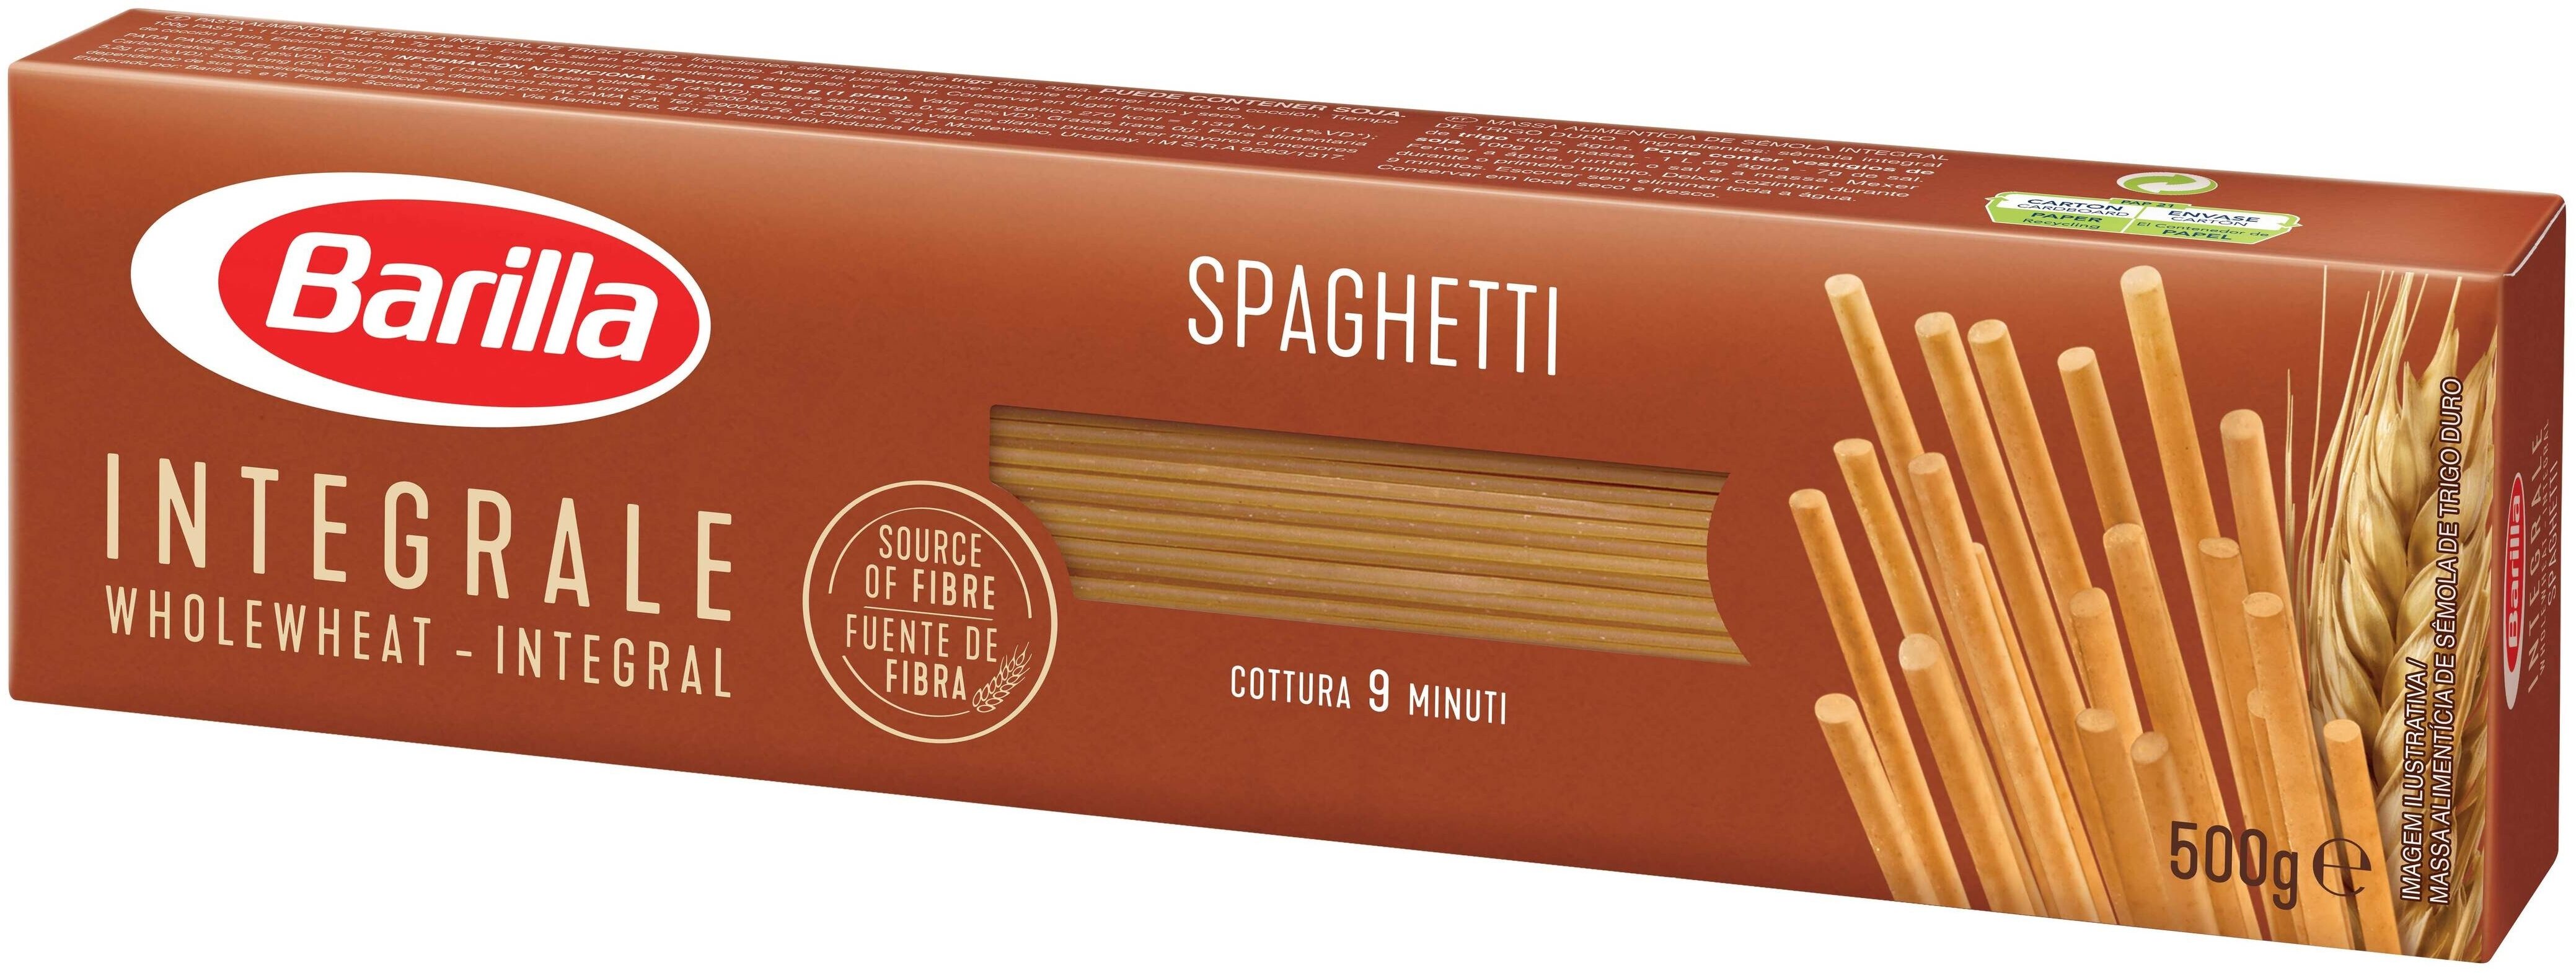 Barilla pates integrale spaghetti au ble complet 500g - Produit